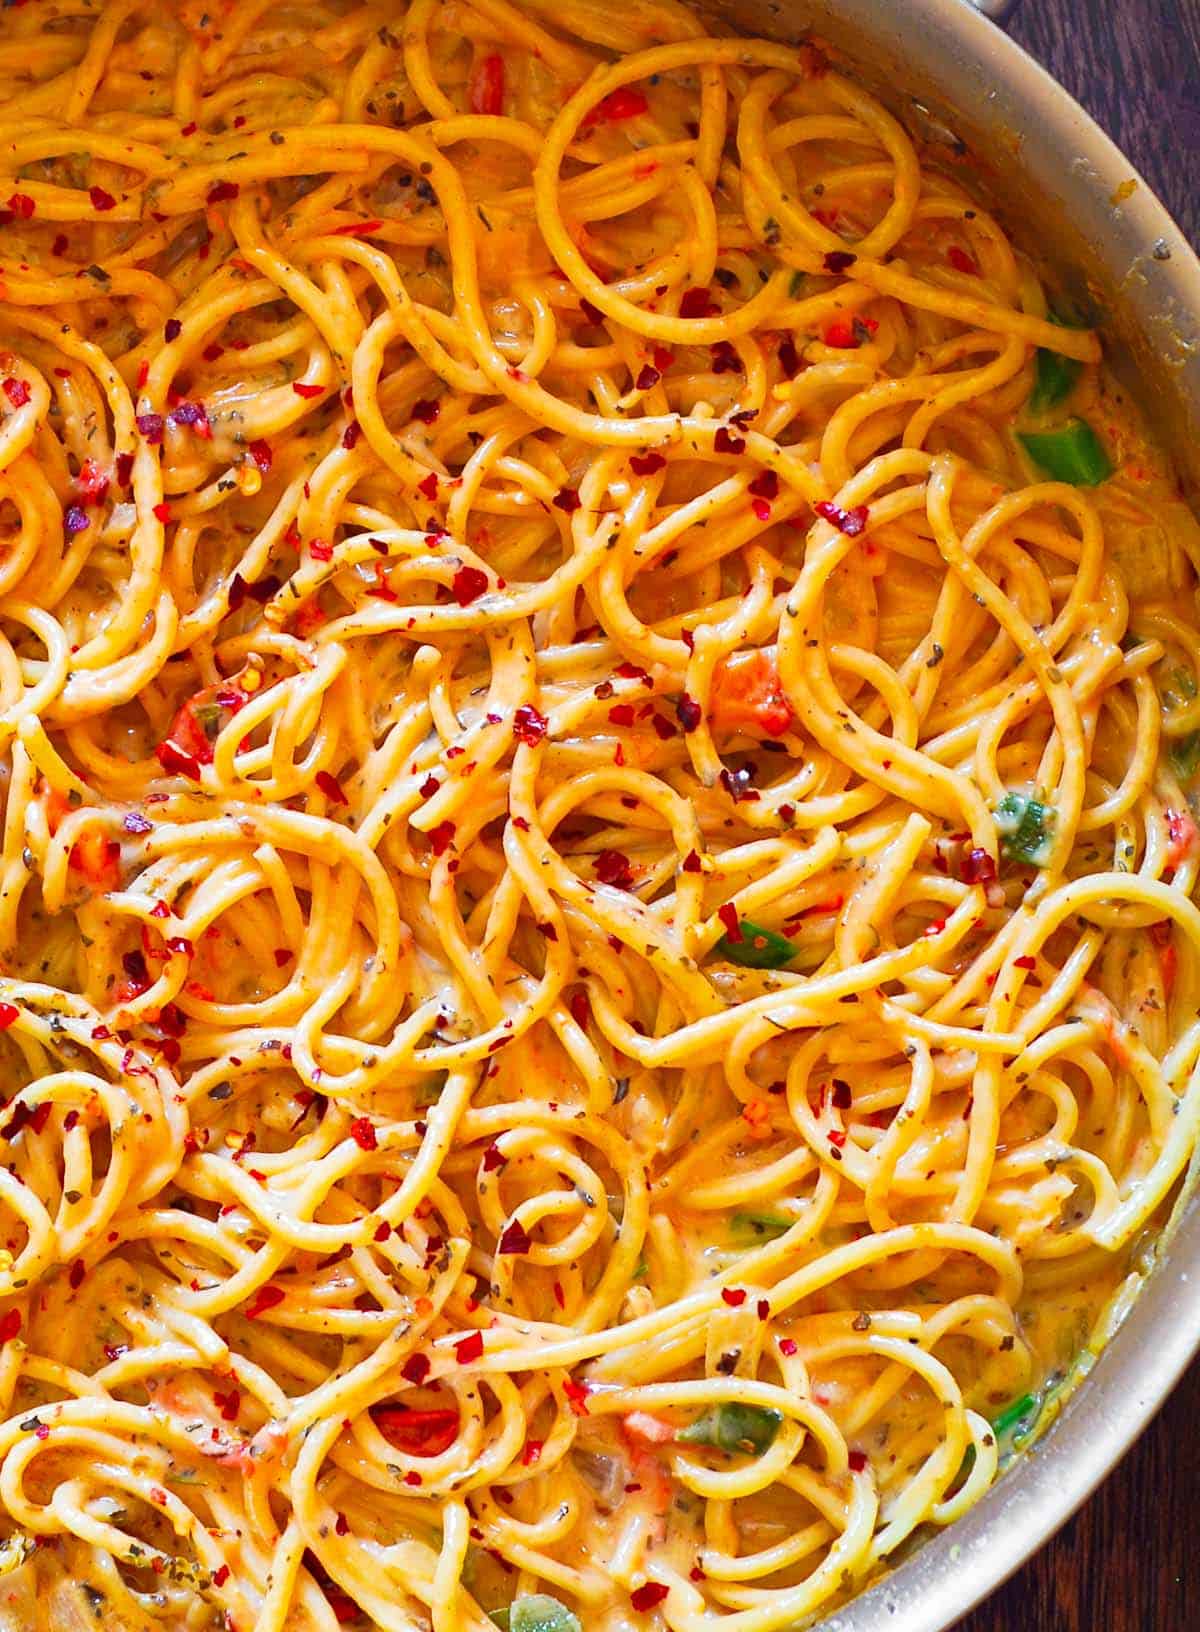 Garlic Butter Spaghetti in a skillet